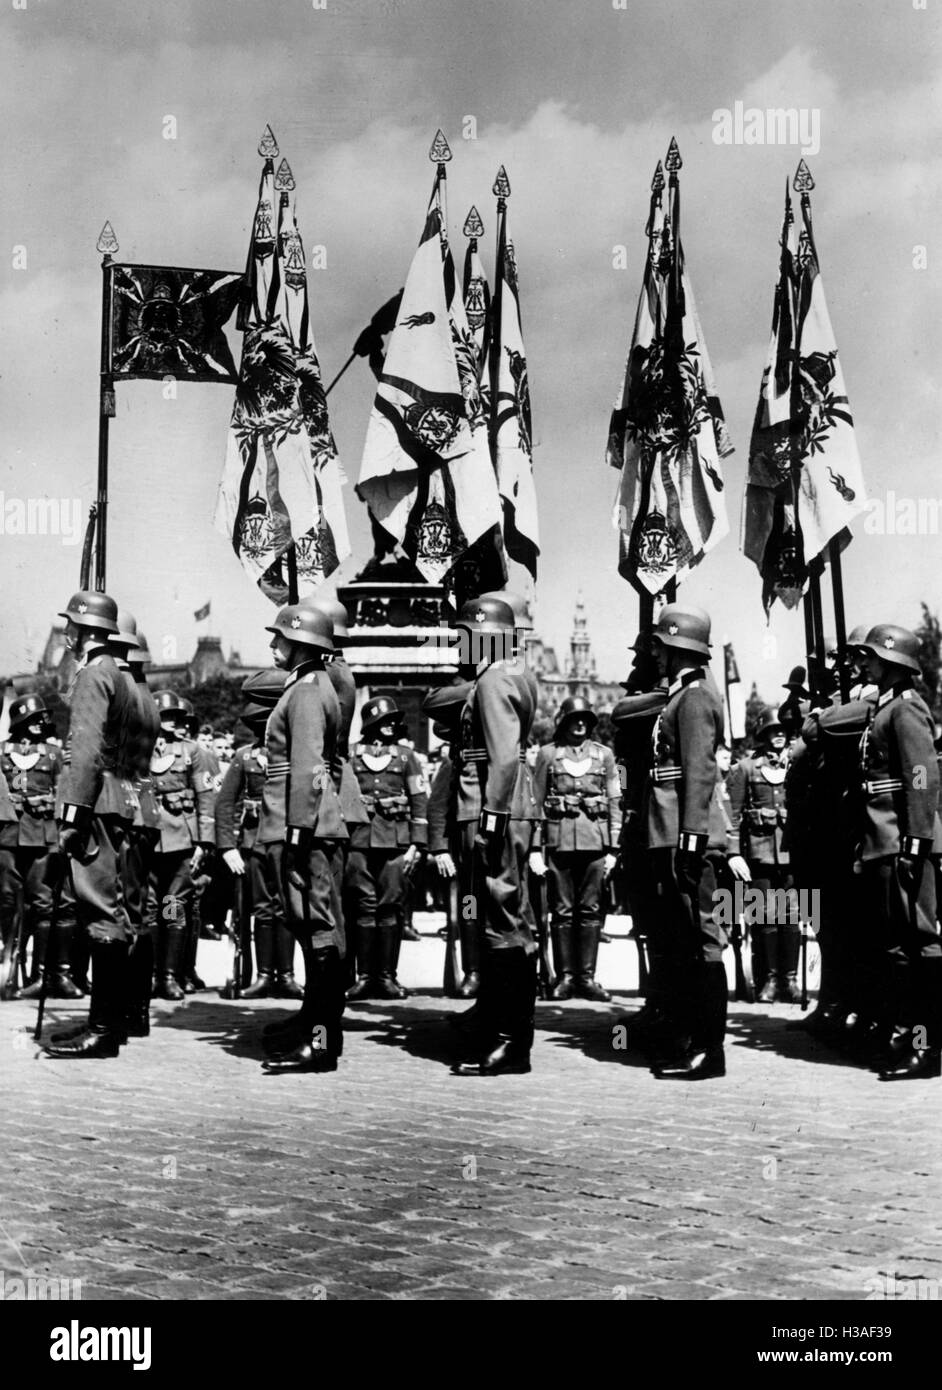 Rallye der Reichskolonialbund (Reich Colonial League) in Wien, 1939 Stockfoto